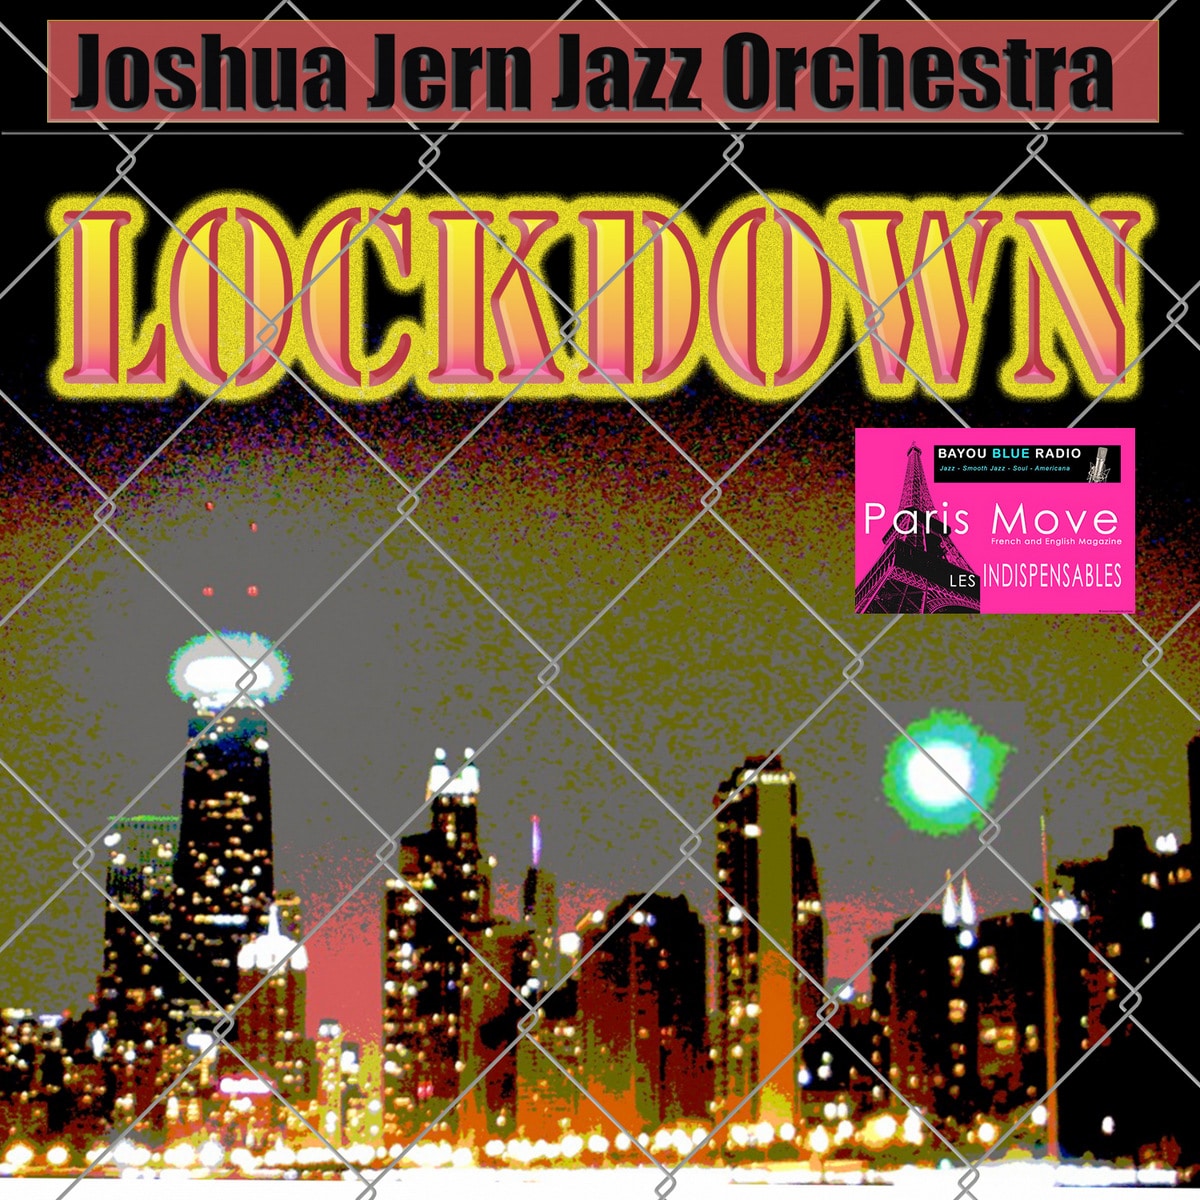 The Joshua Jern Orchestra – Lockdown